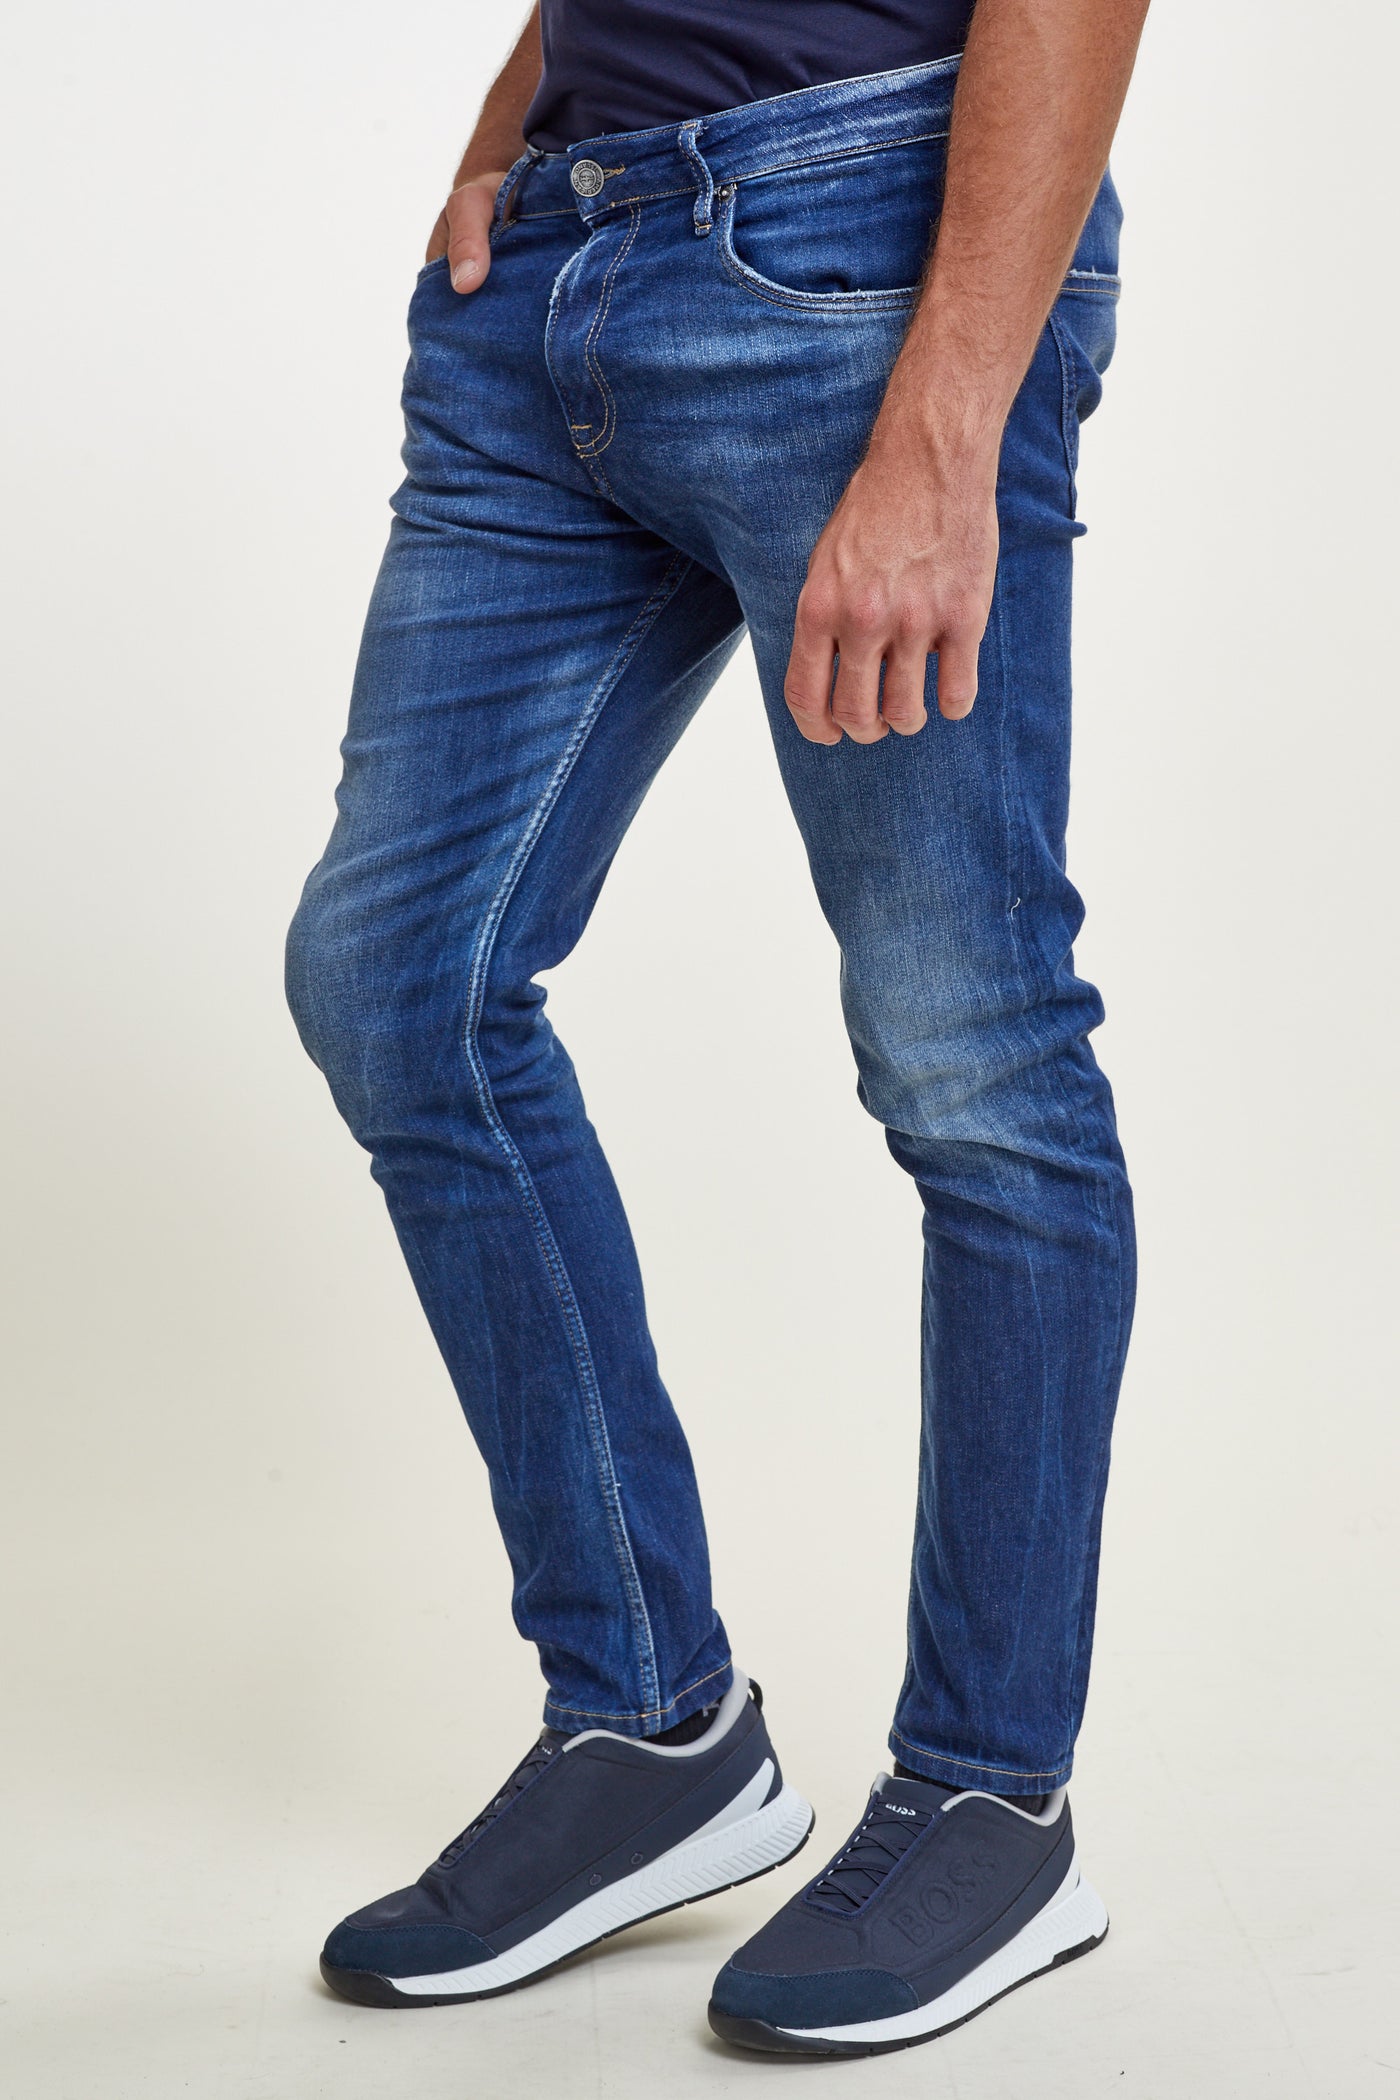 מכנס ג'ינס סלים 896 בצבע כחול